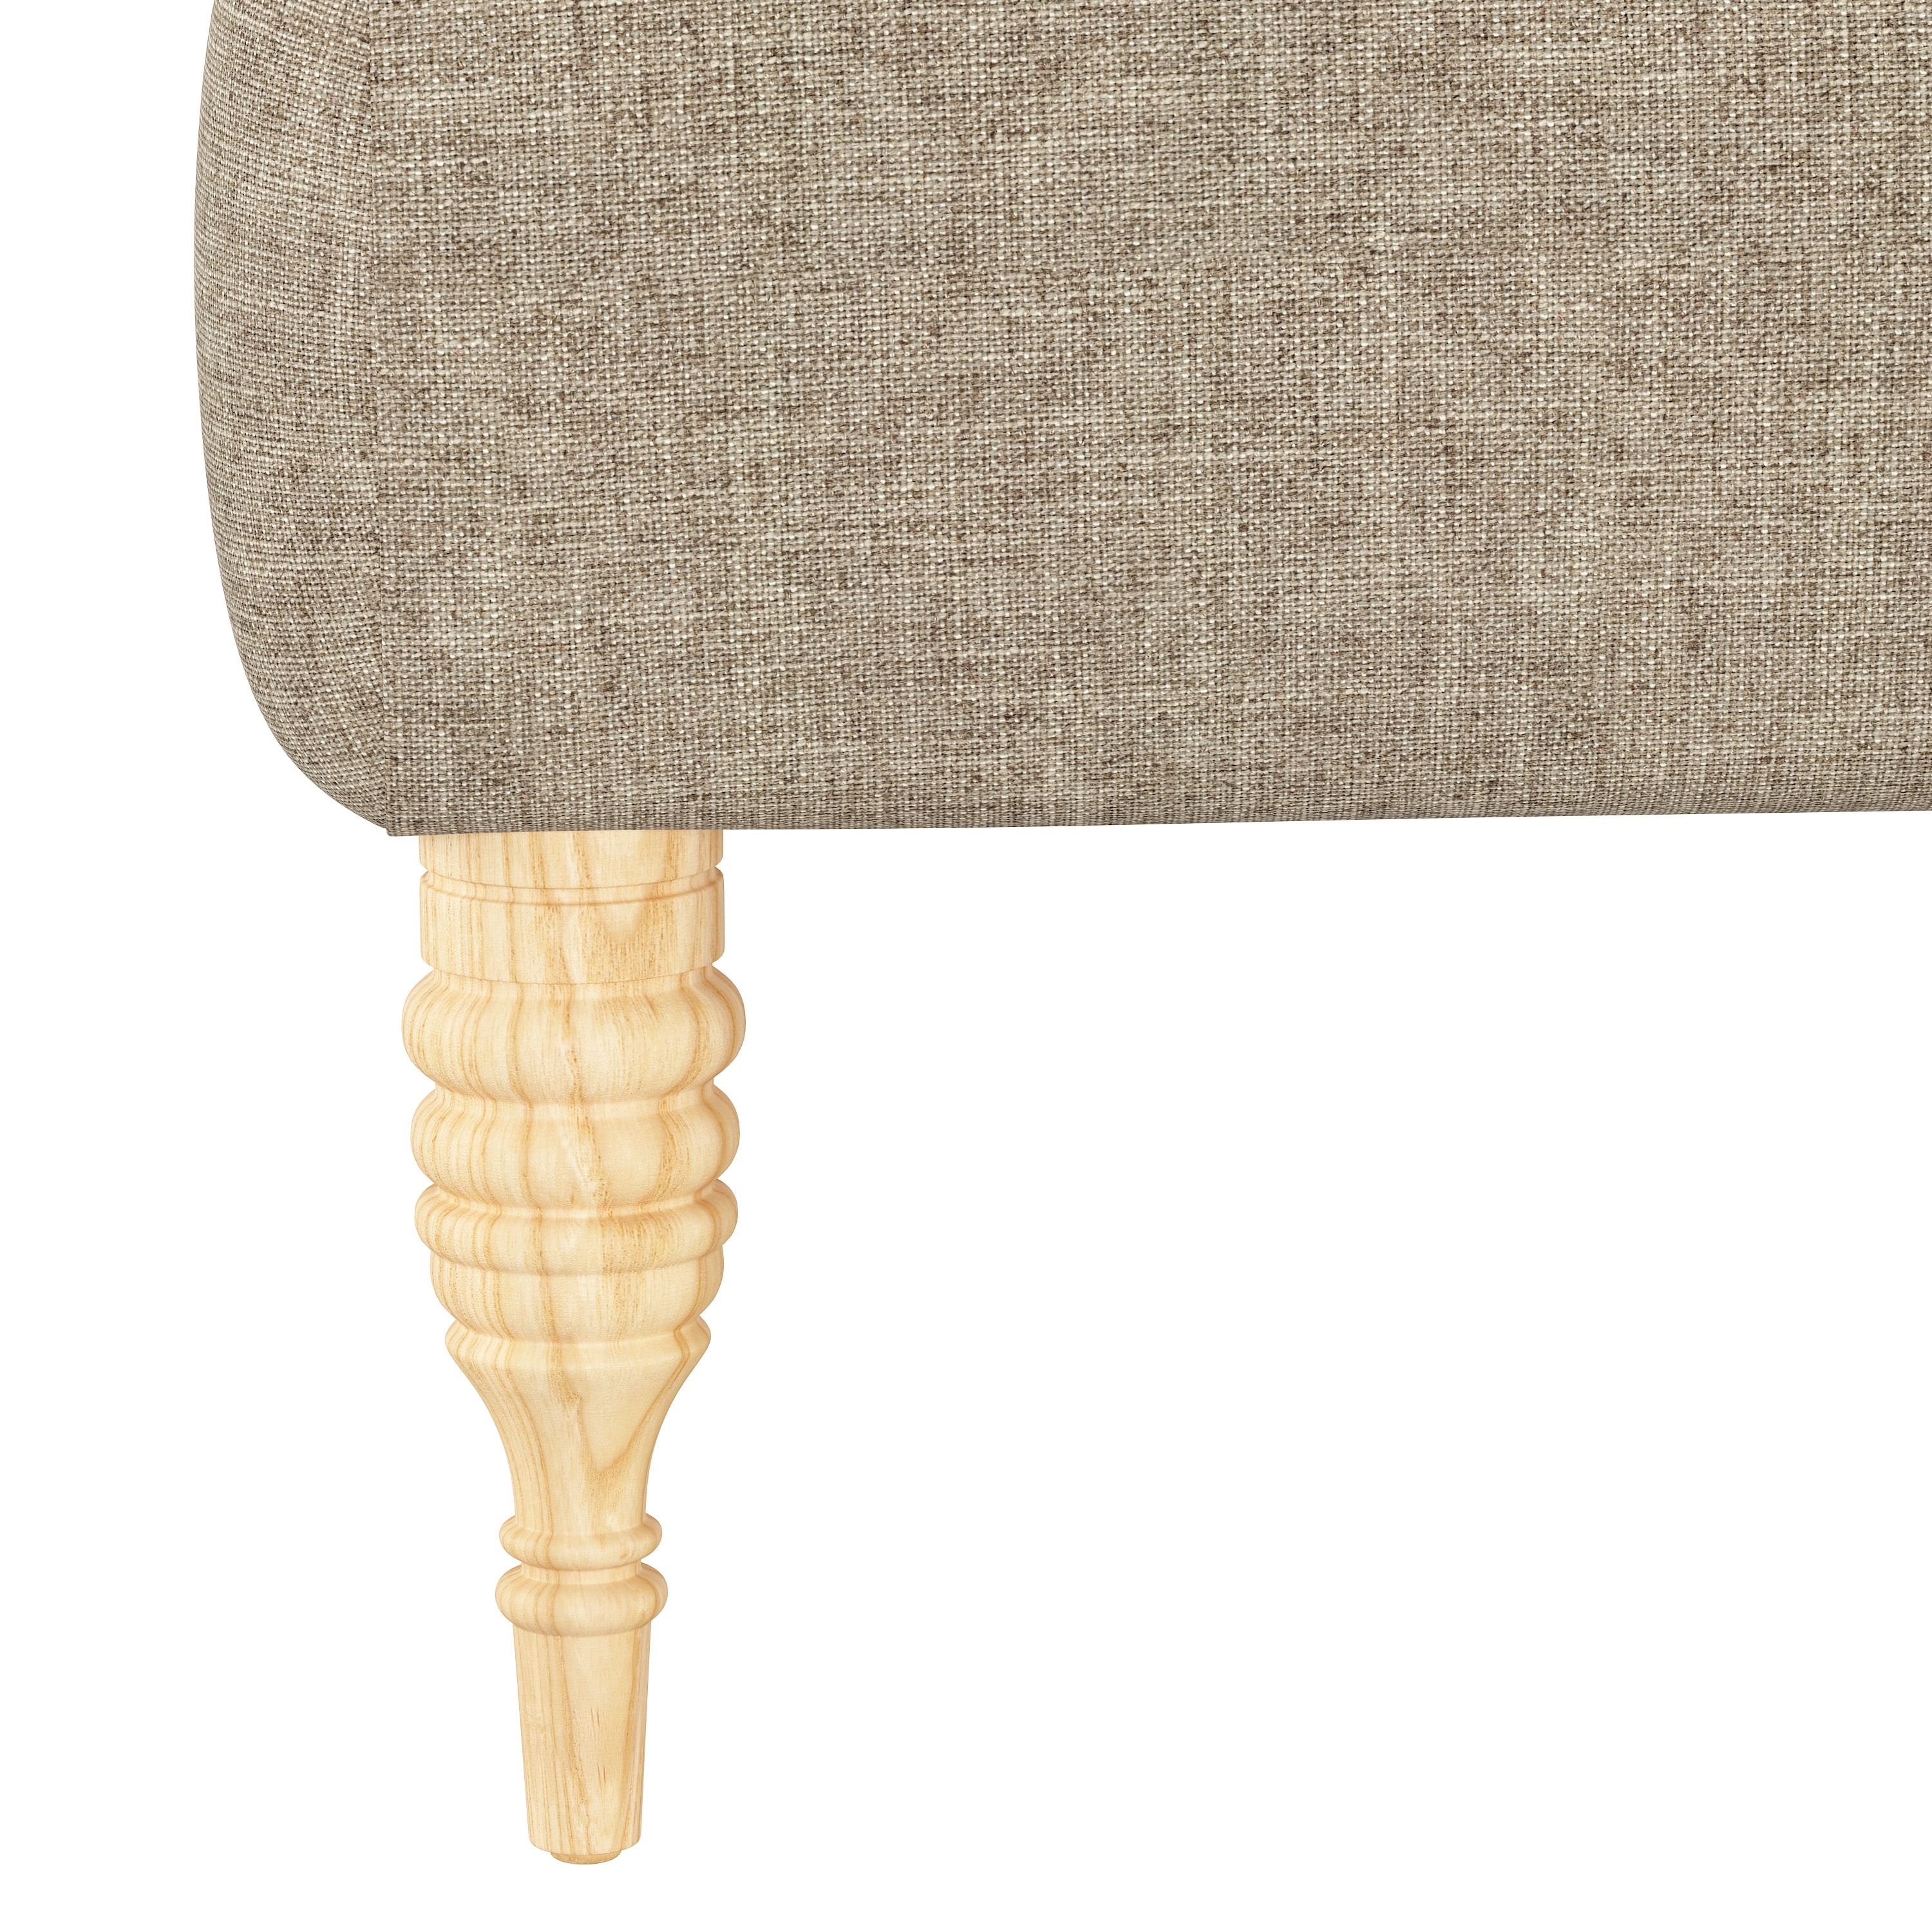 Merrill Chair, Linen - Image 4